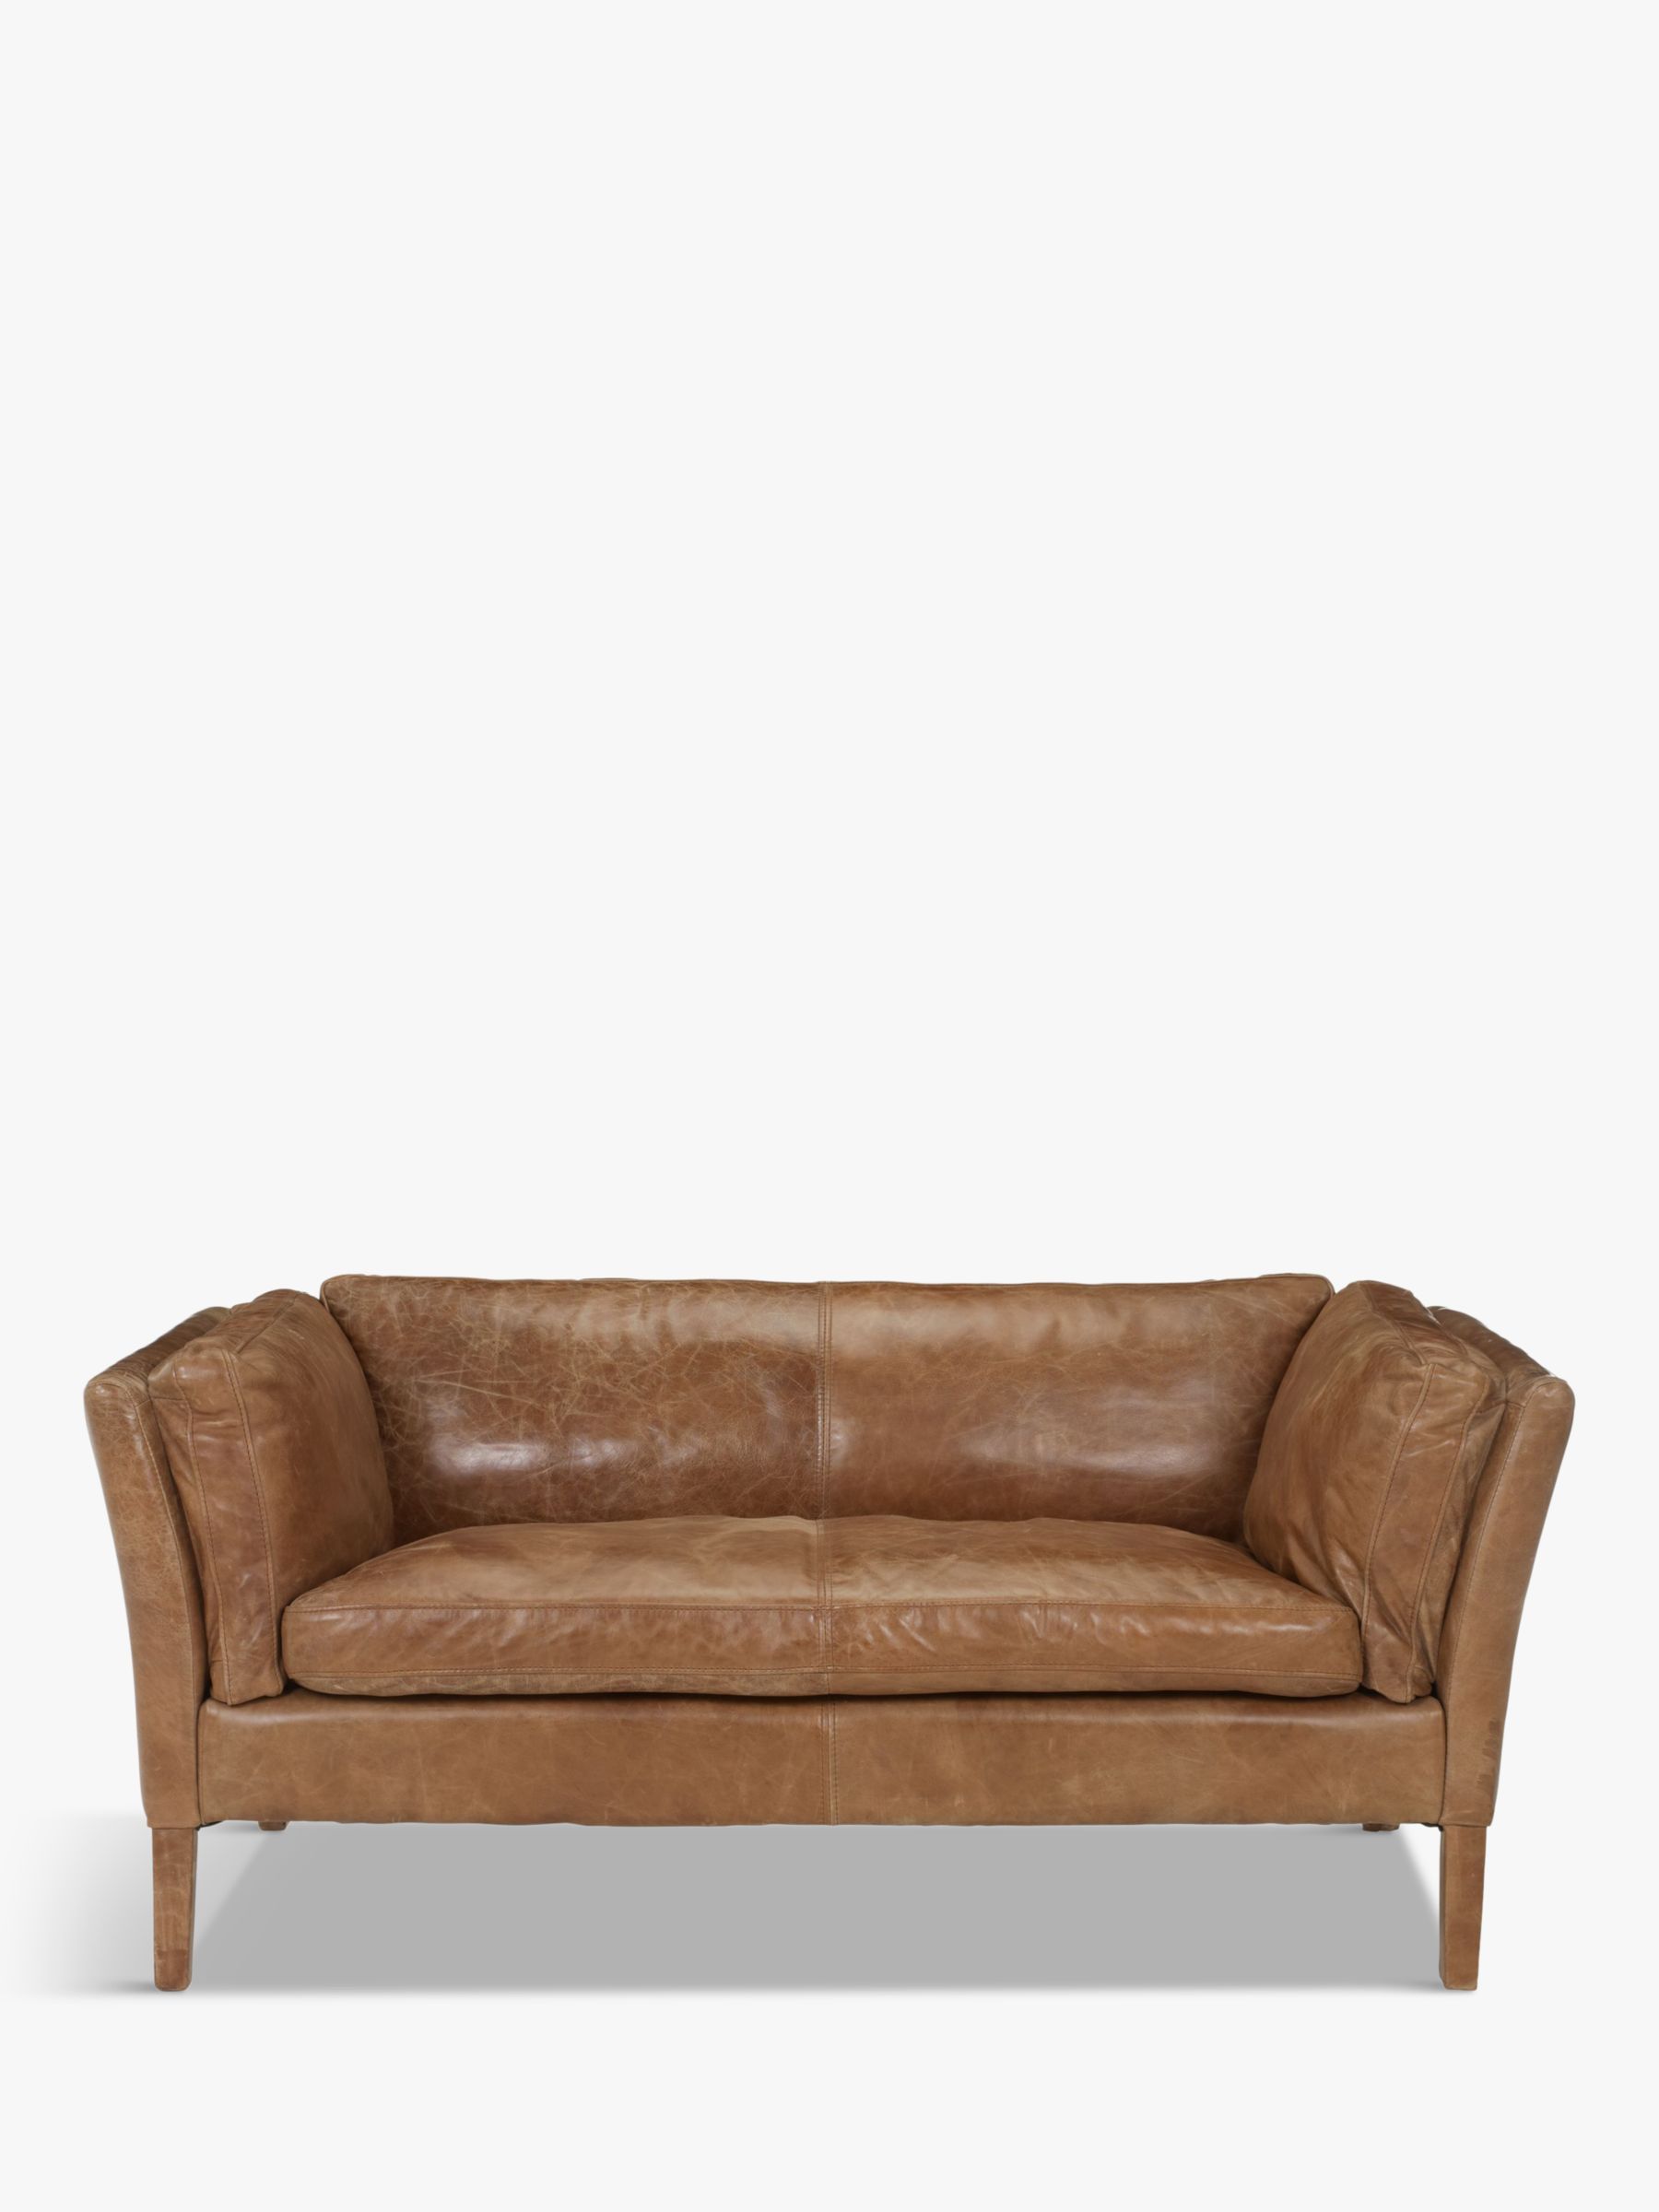 John Lewis Groucho Small Leather Sofa, Walnut, width 152cm